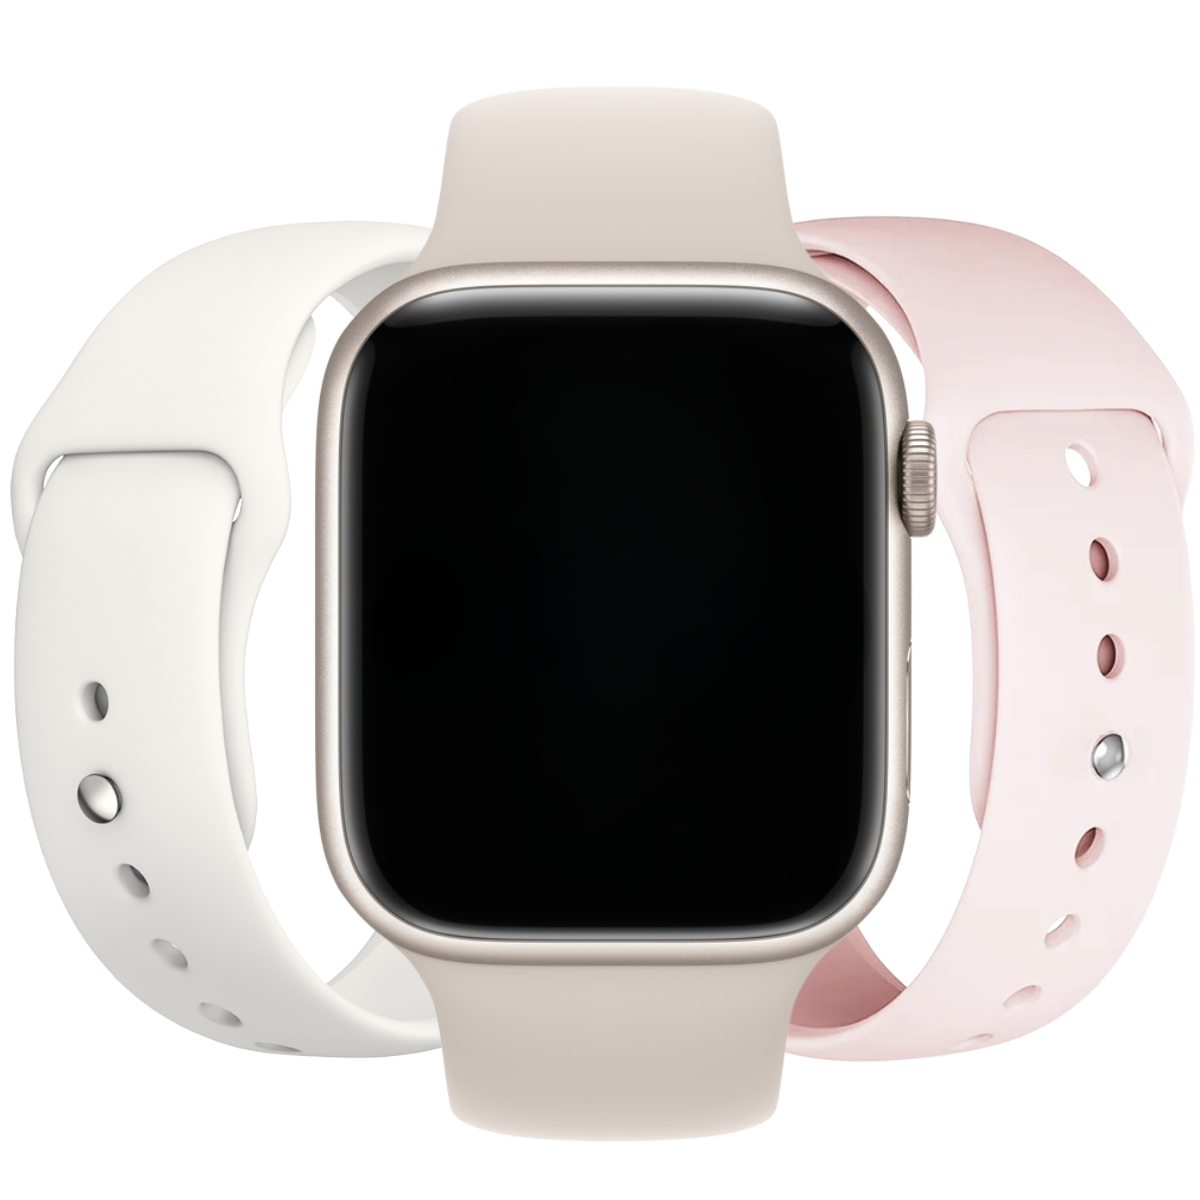 Soft sports Apple Watch bundle deal - 3x